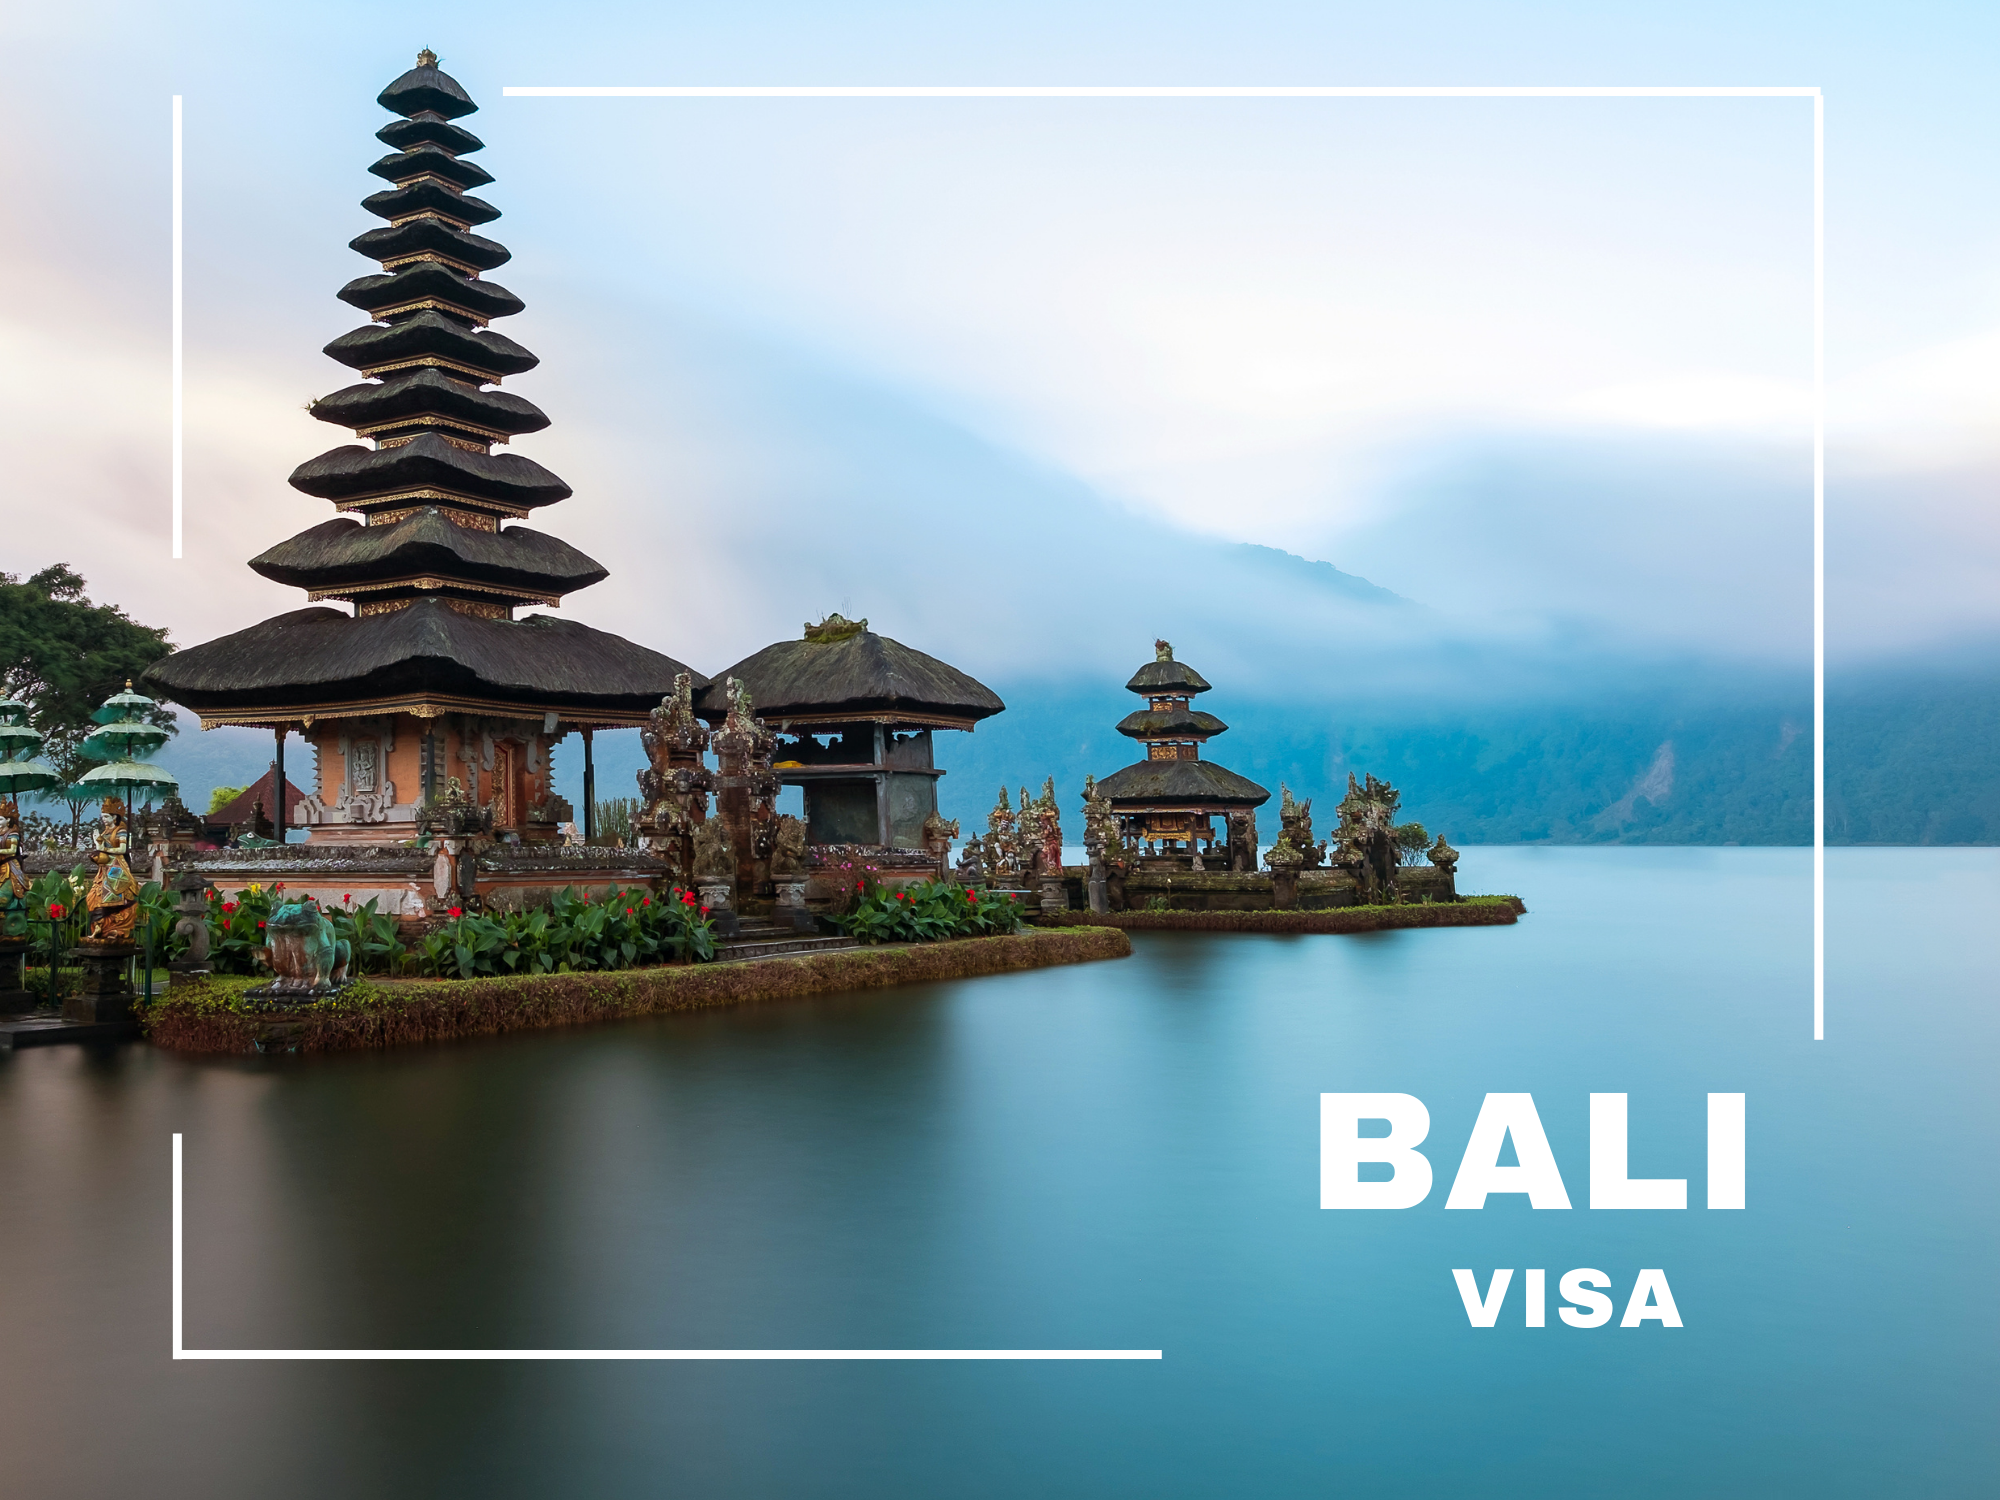 Bali visa for UAE residents